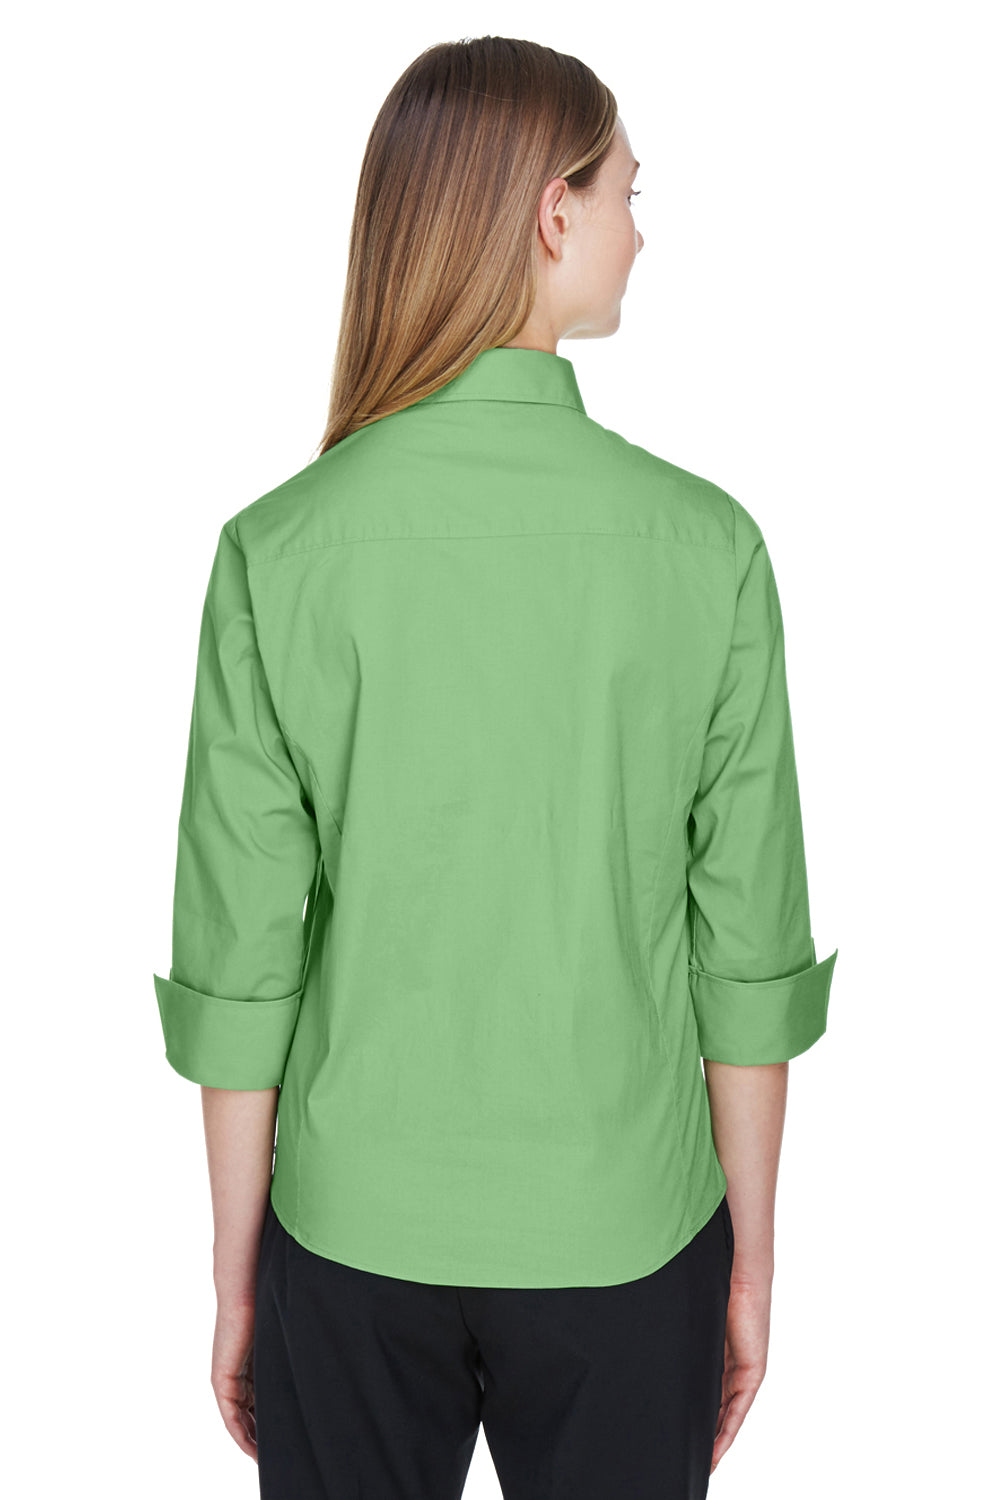 Devon & Jones DP625W Womens Perfect Fit 3/4 Sleeve Button Down Shirt Lime Green Back